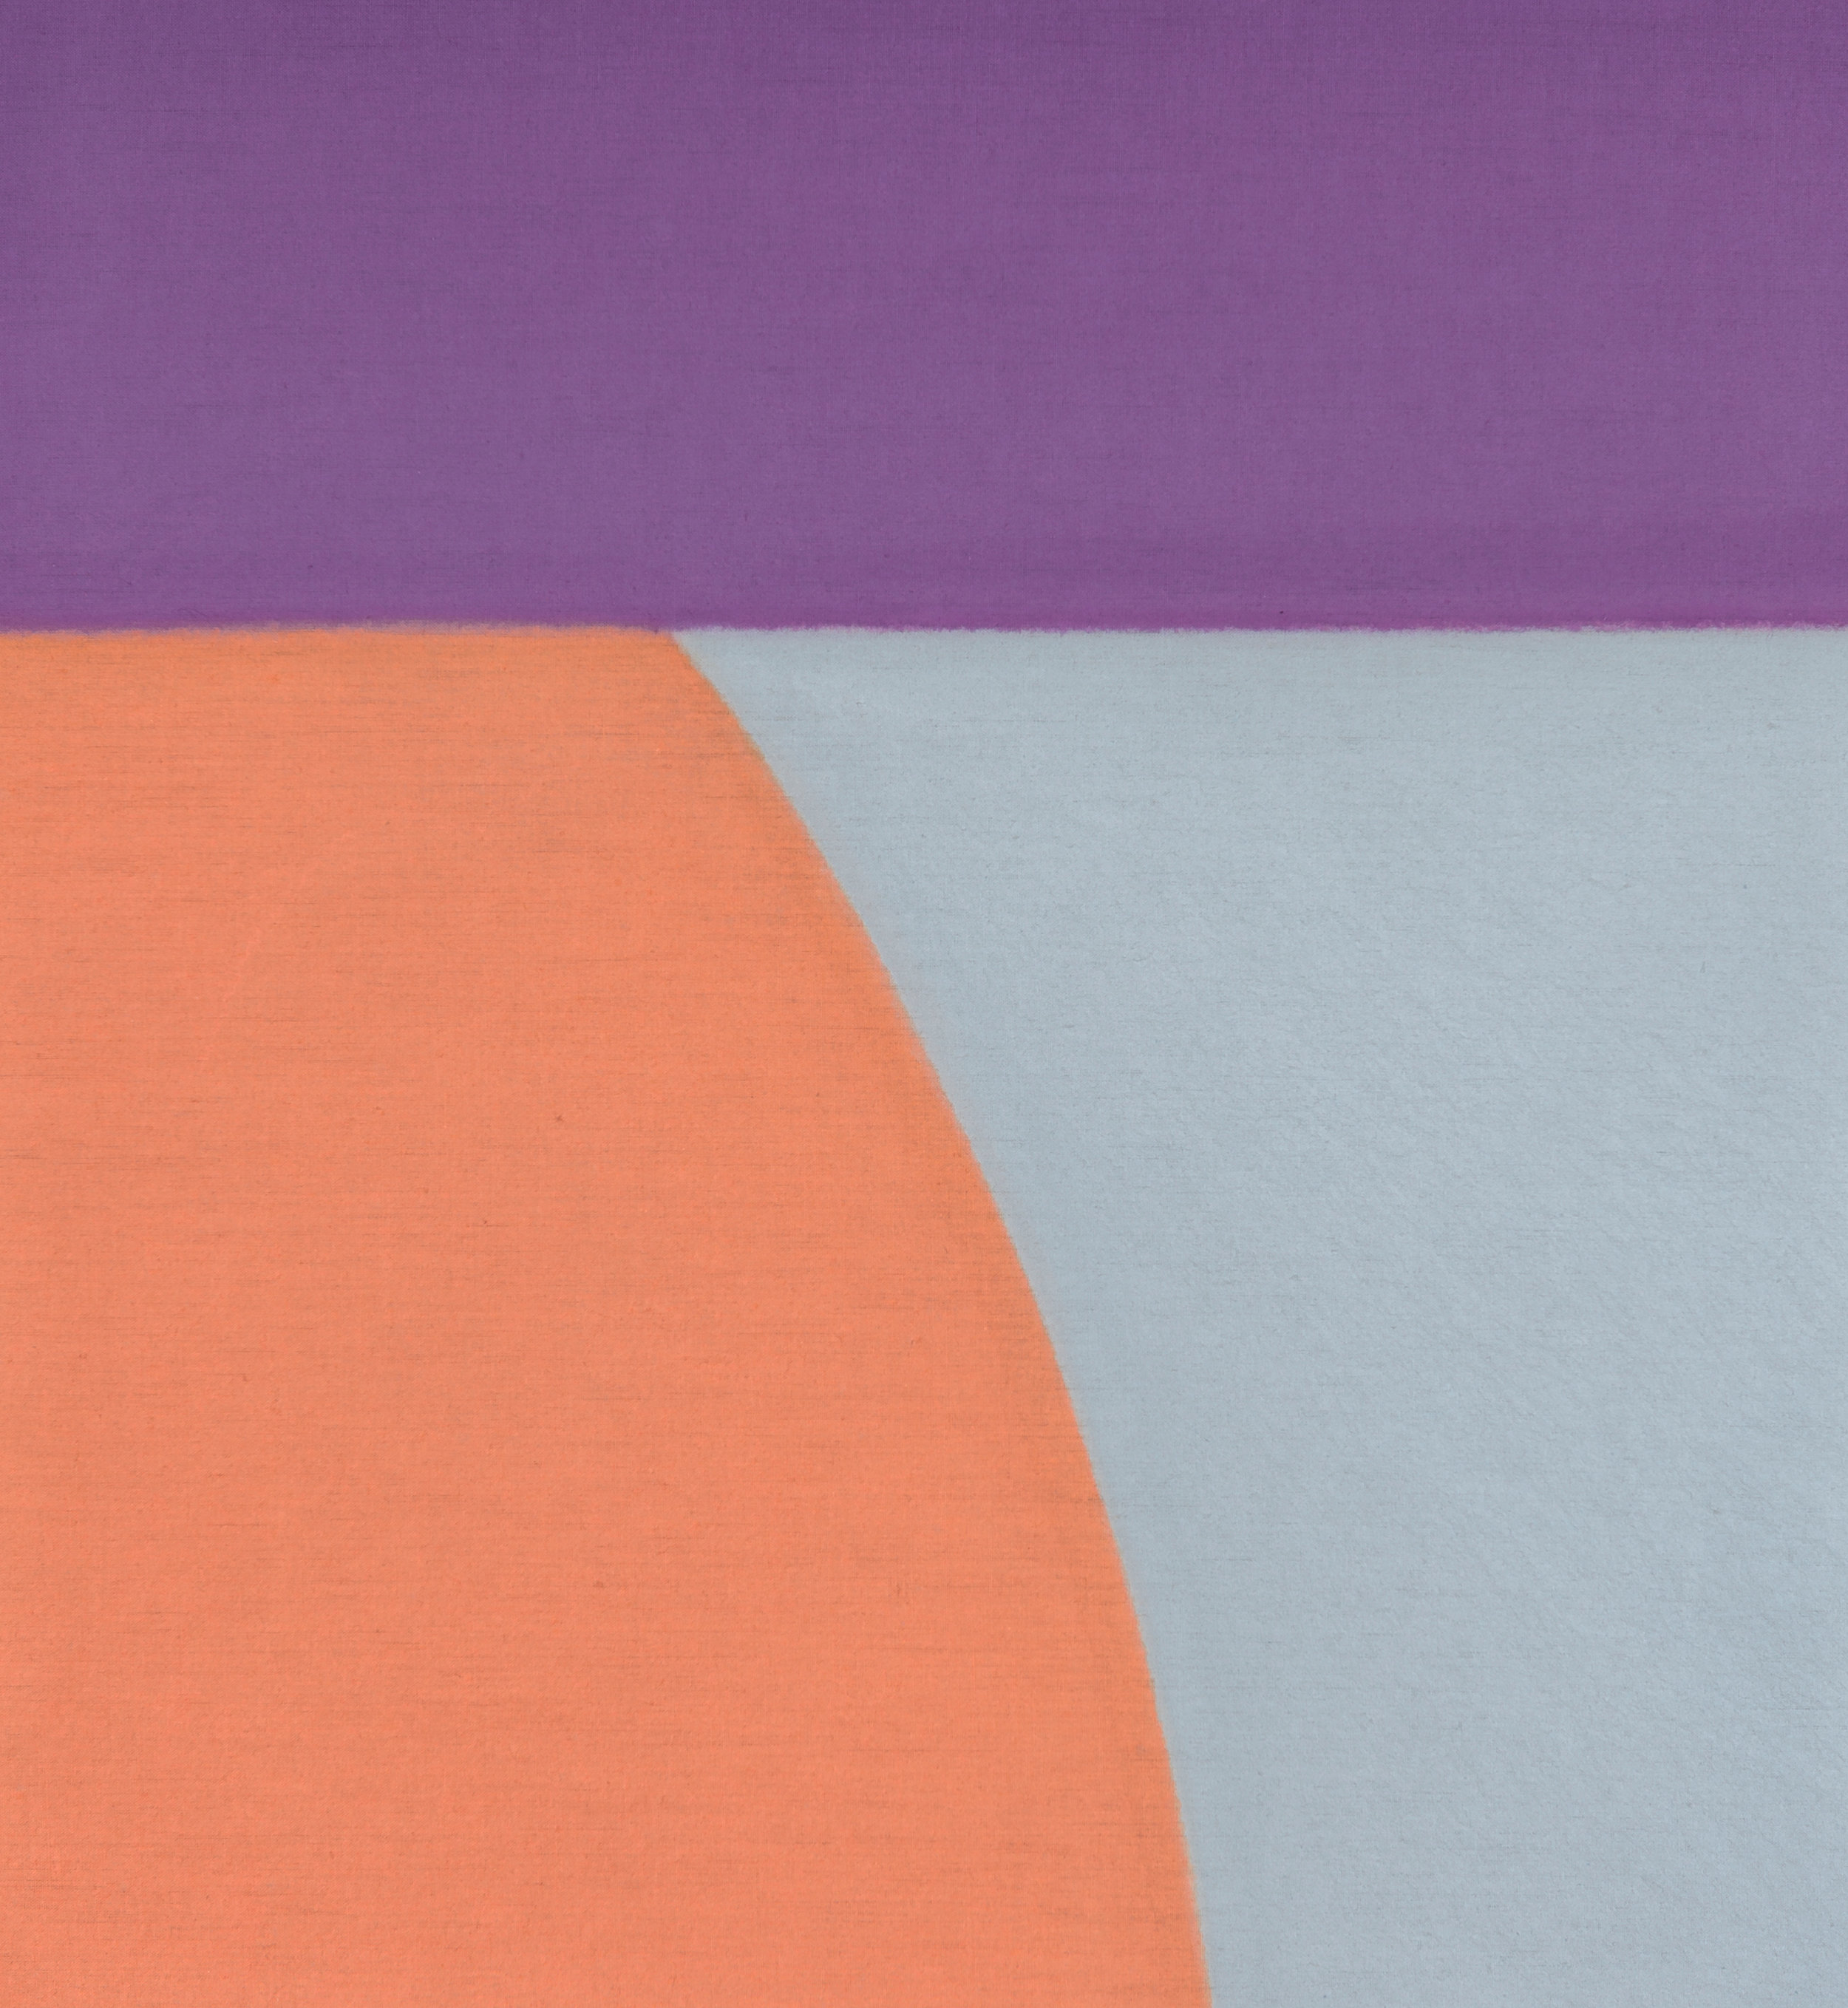  Untitled (Purple/Orange), 2016. Oil on Linen, 40 x 34 inches. 